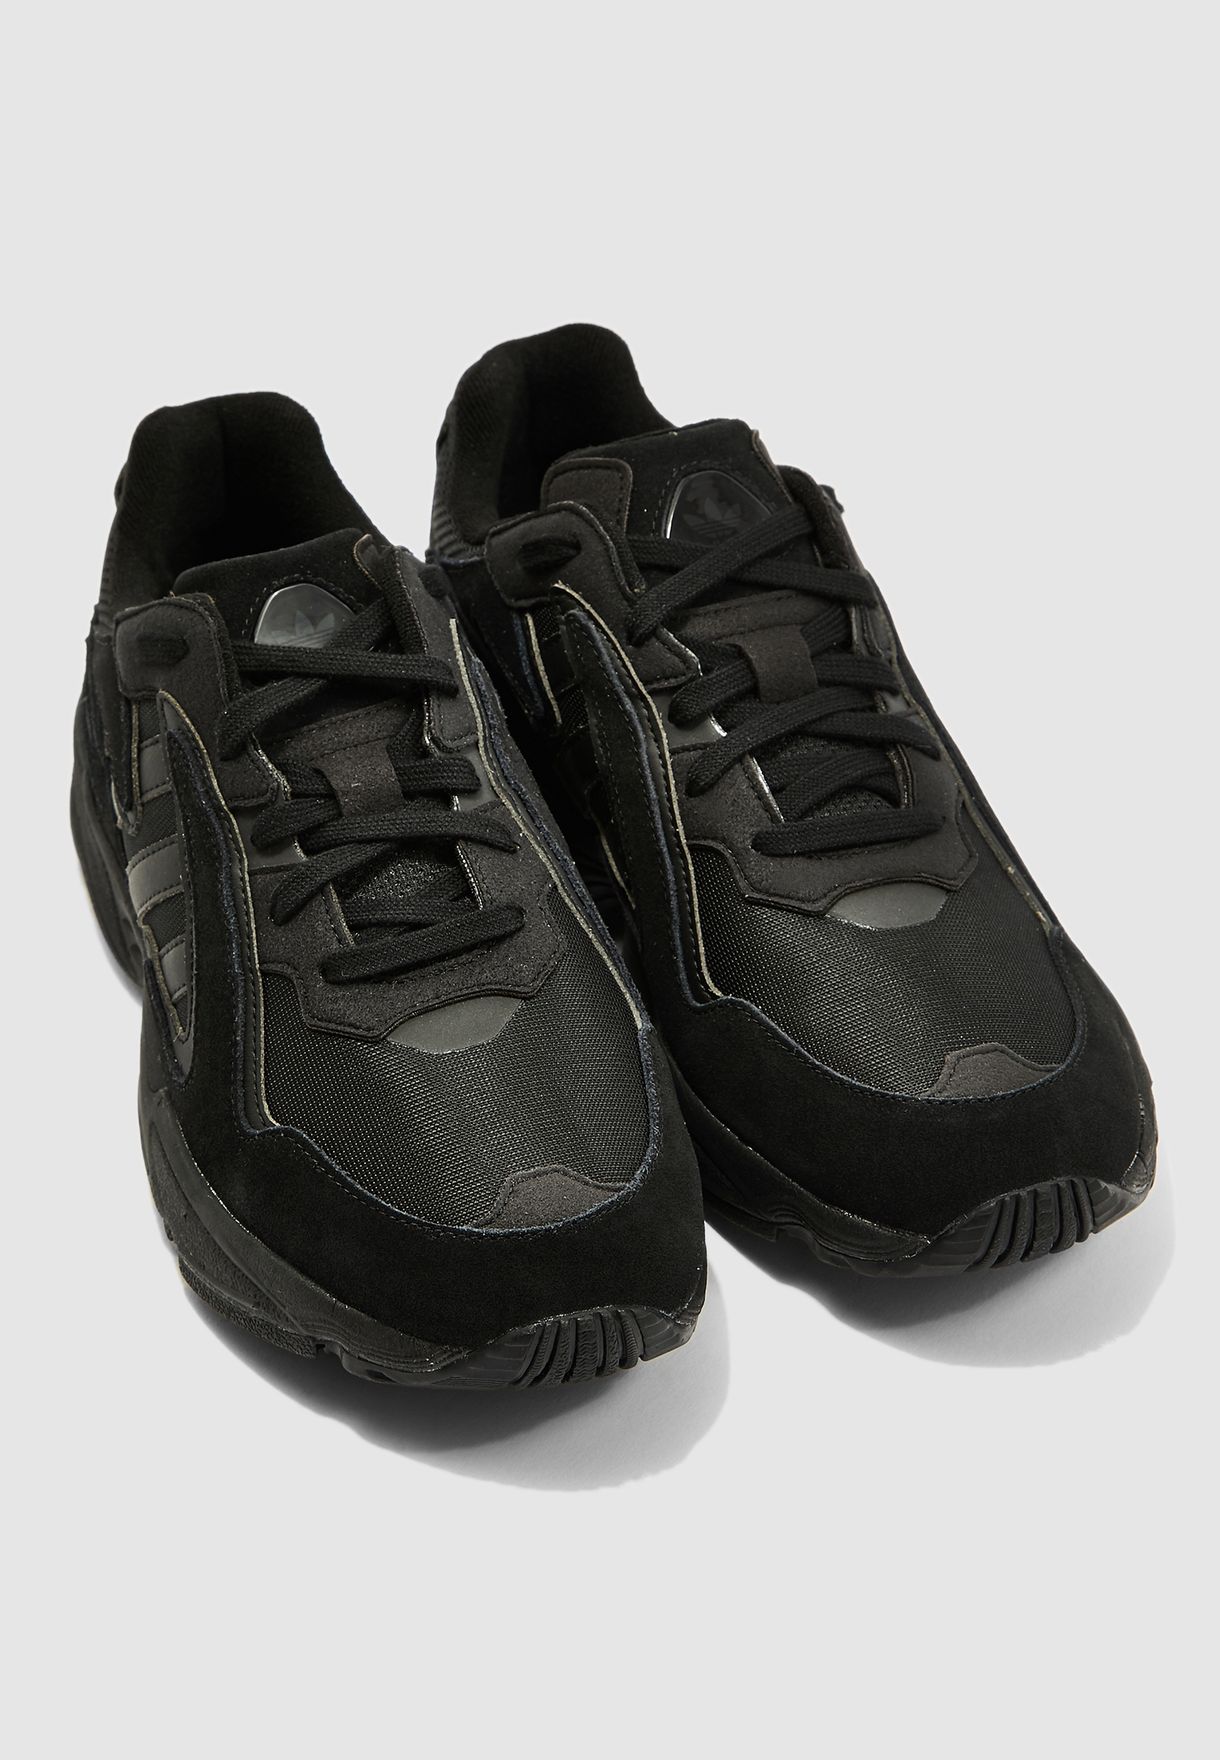 adidas yung 96 all black